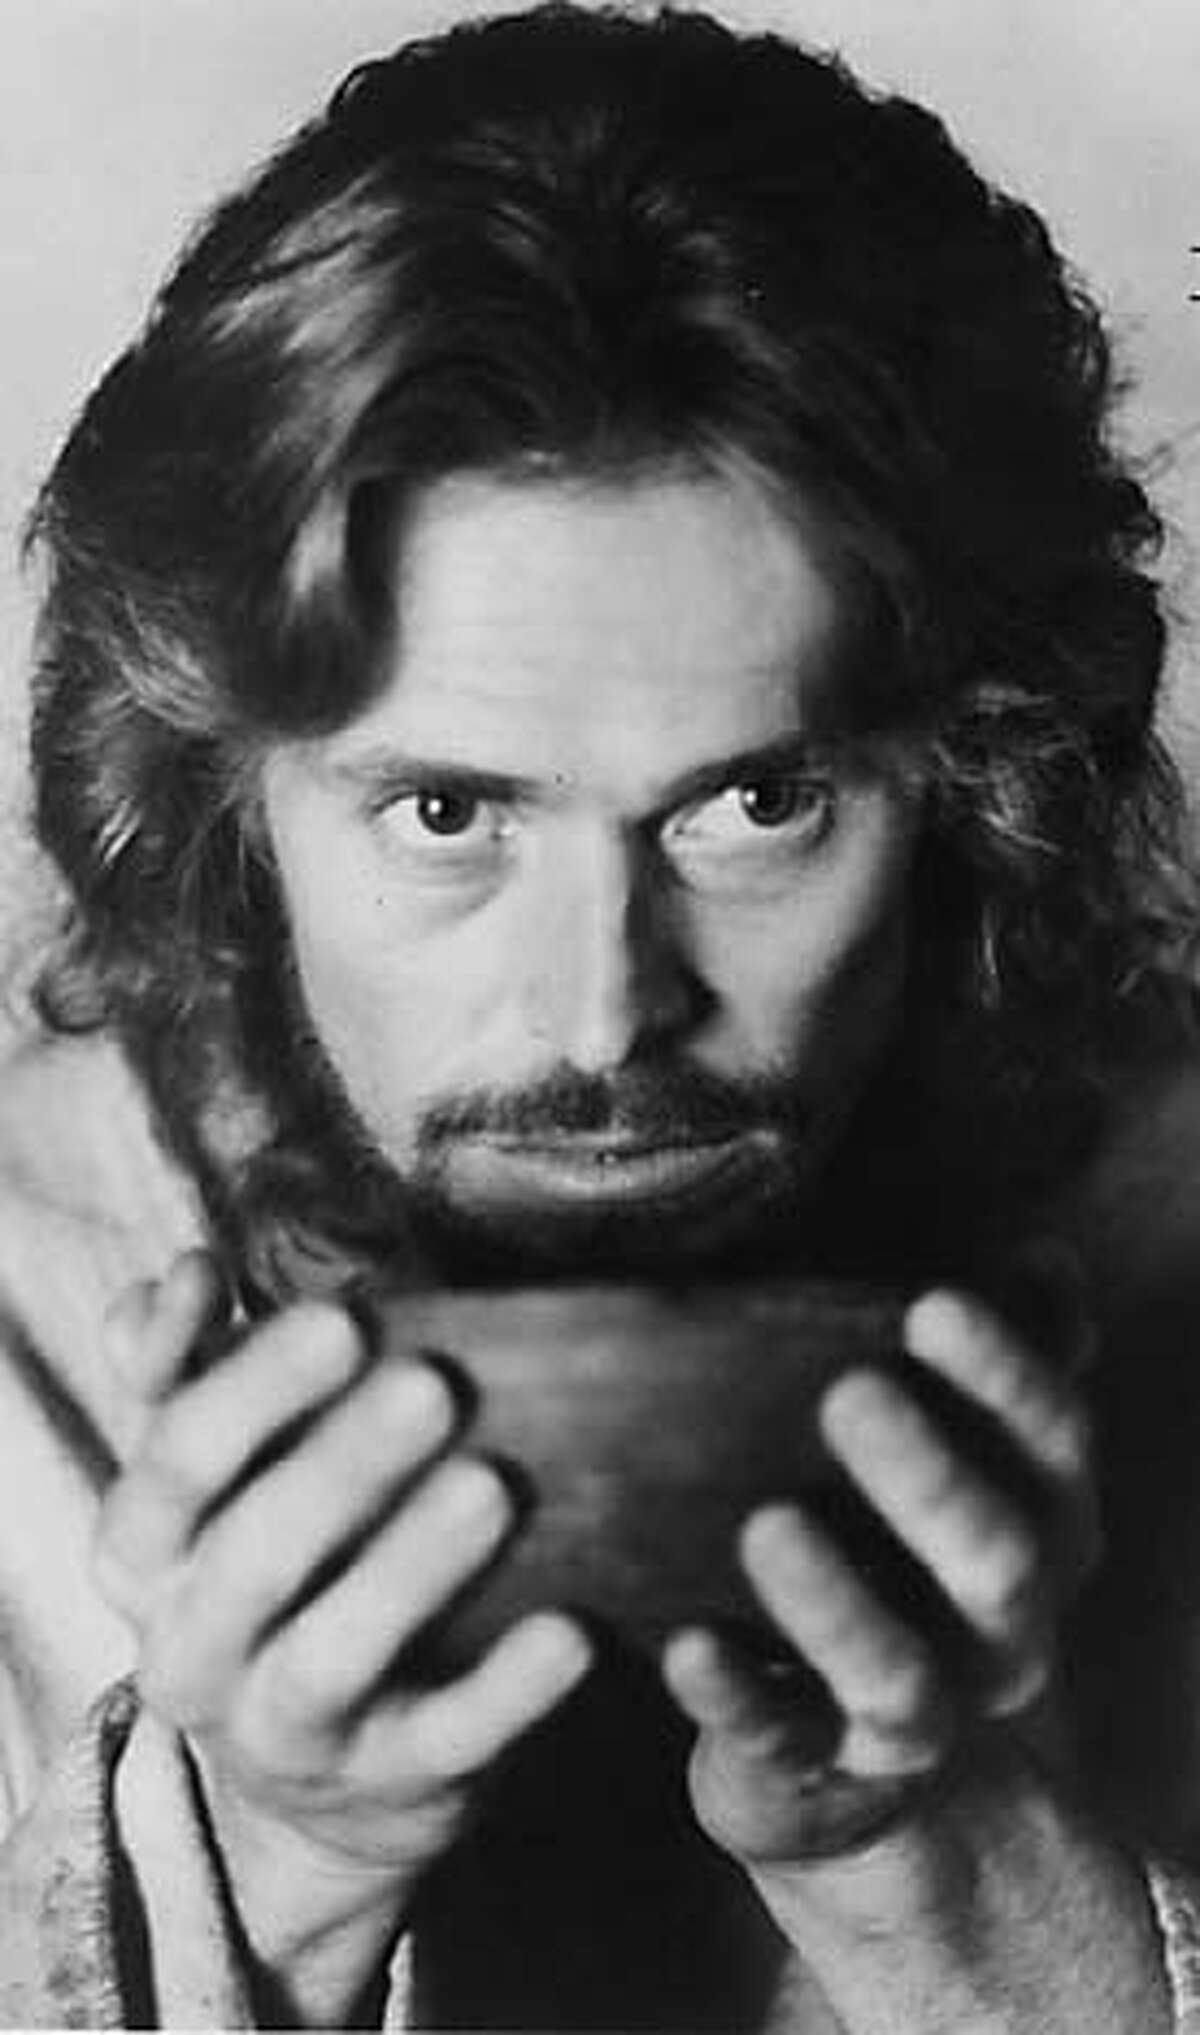 Willem DaFoe as Jesus 1988